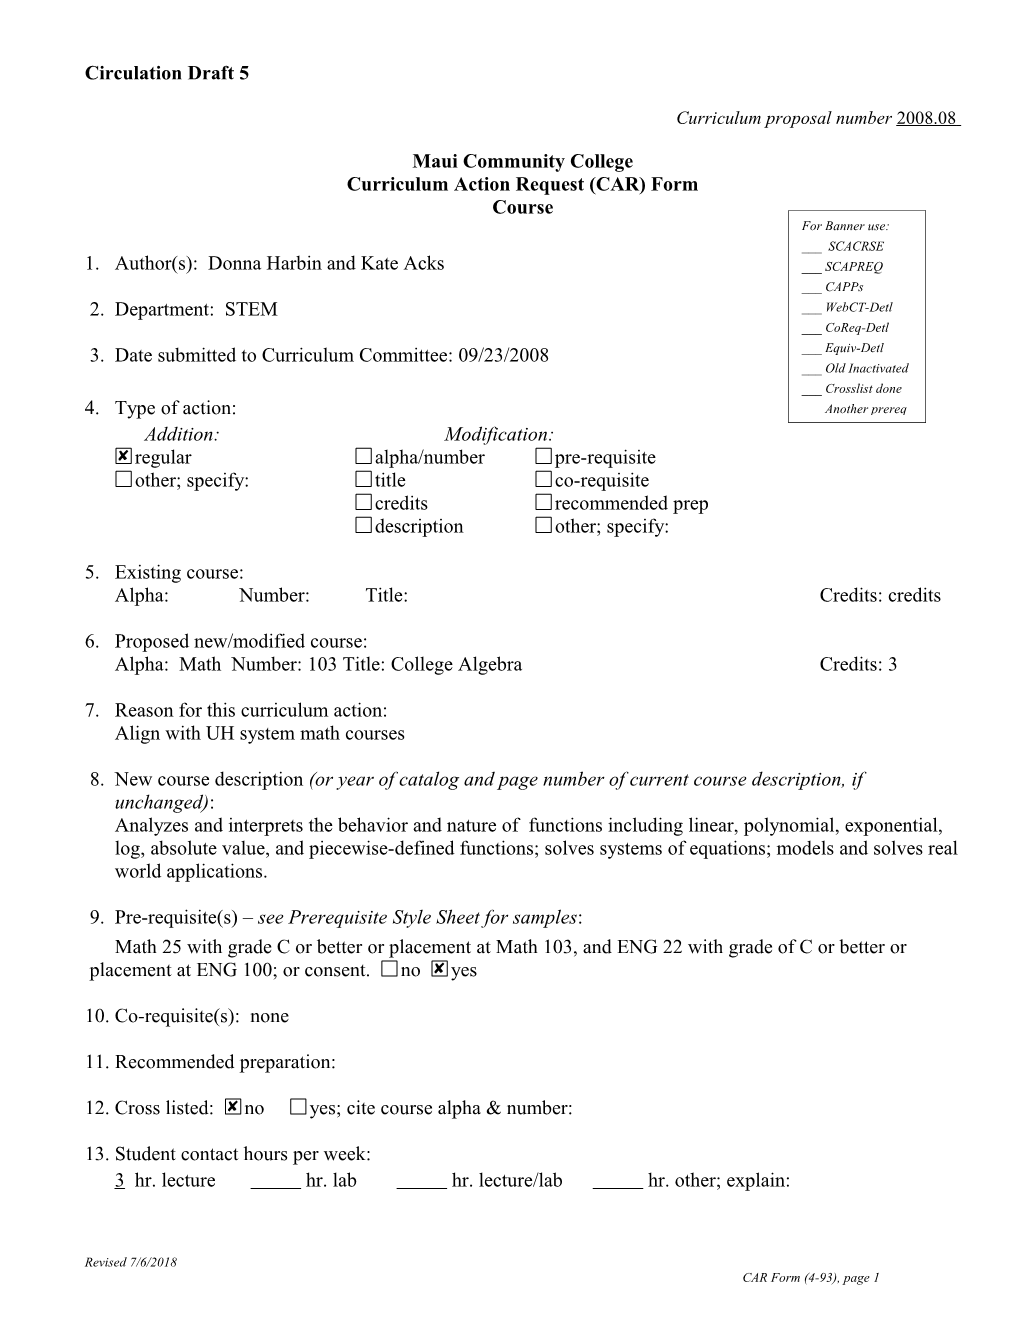 Curriculum Proposal Number 2008 s1